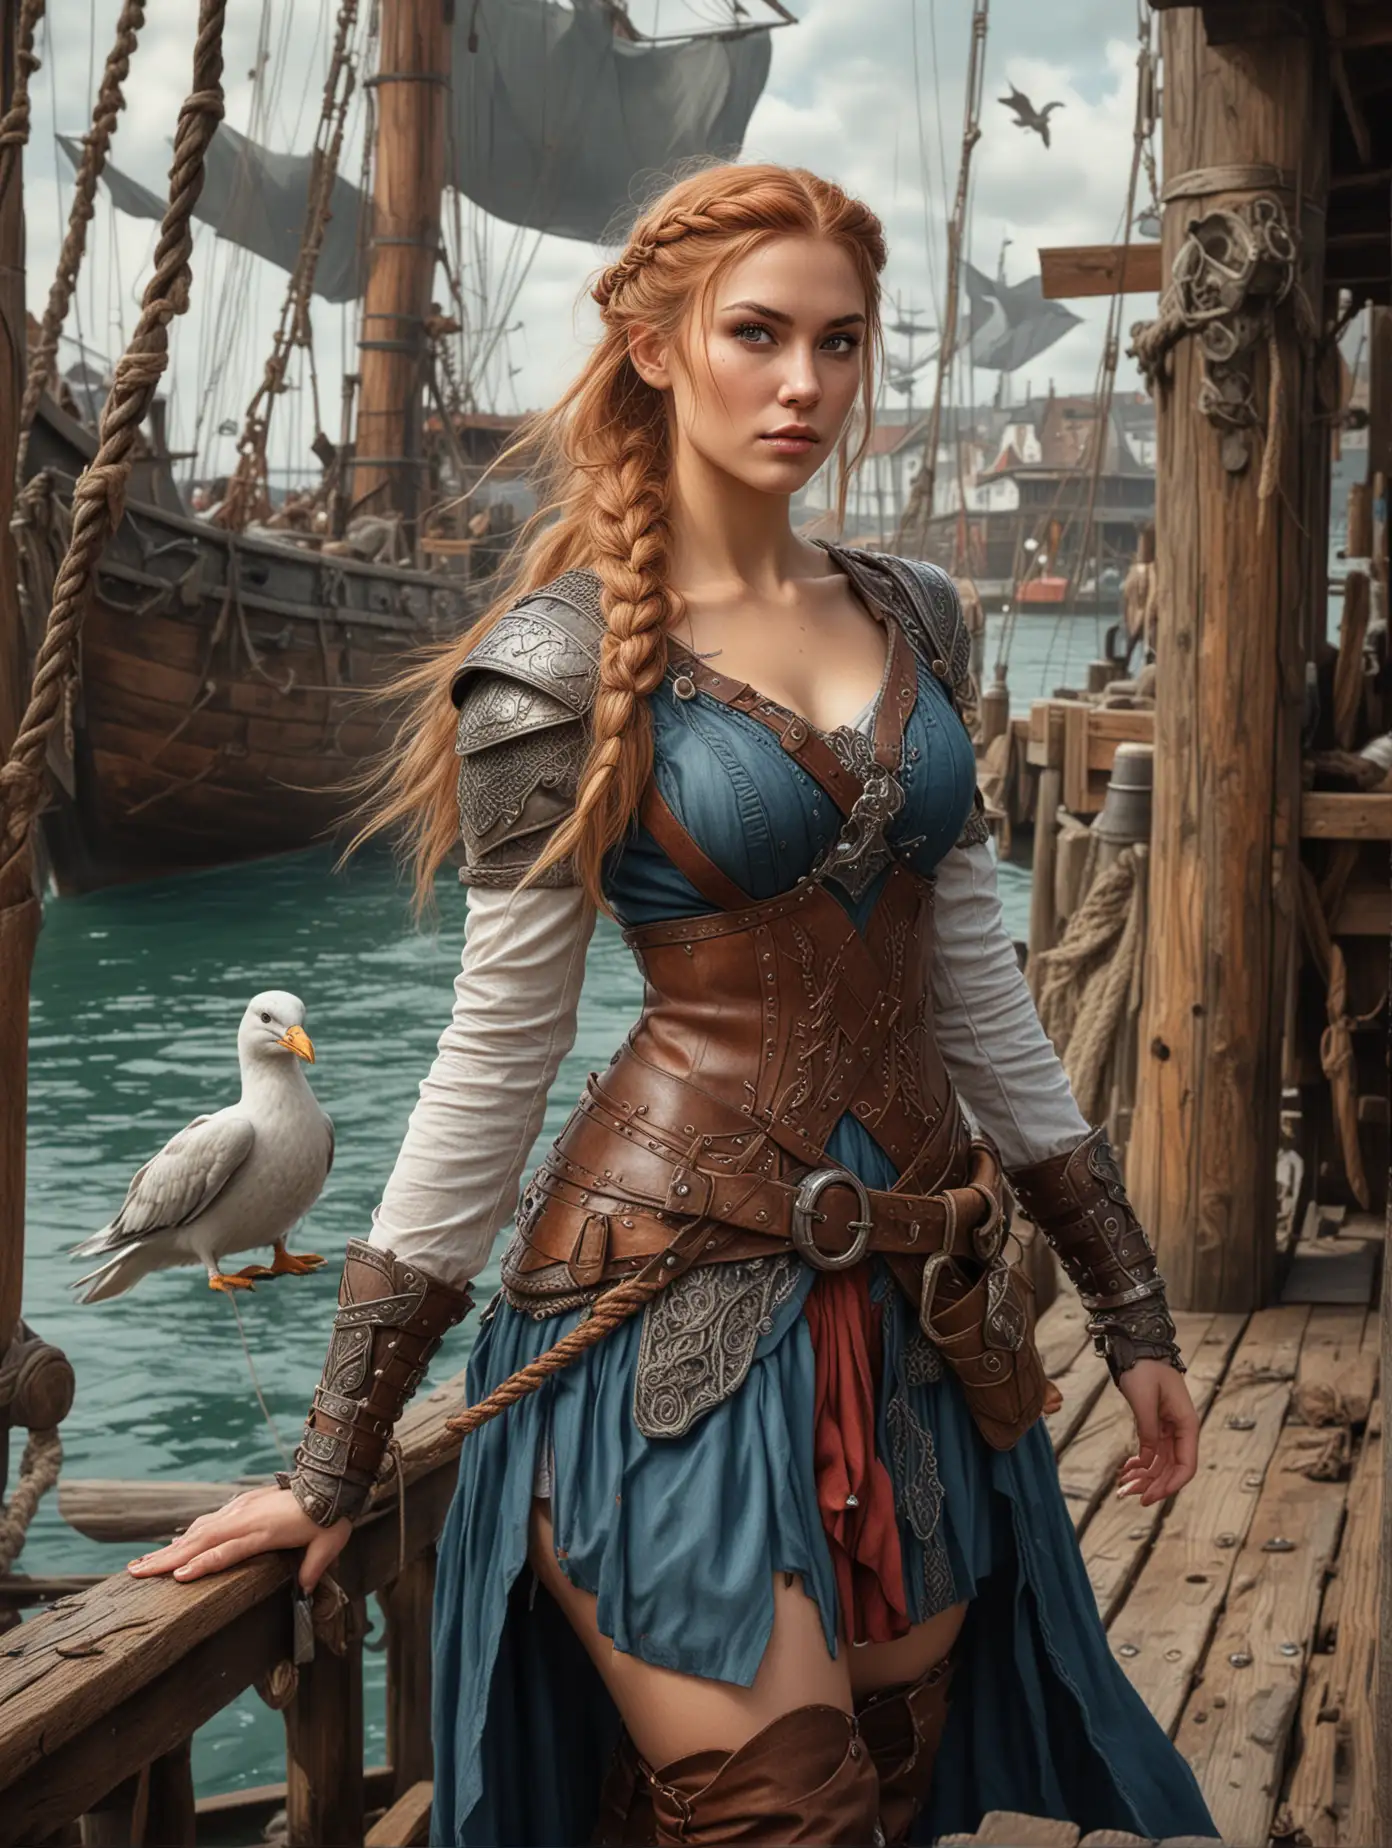 European-Woman-Viking-Warrior-Cosplay-Drawing-on-Wooden-Ship-Deck